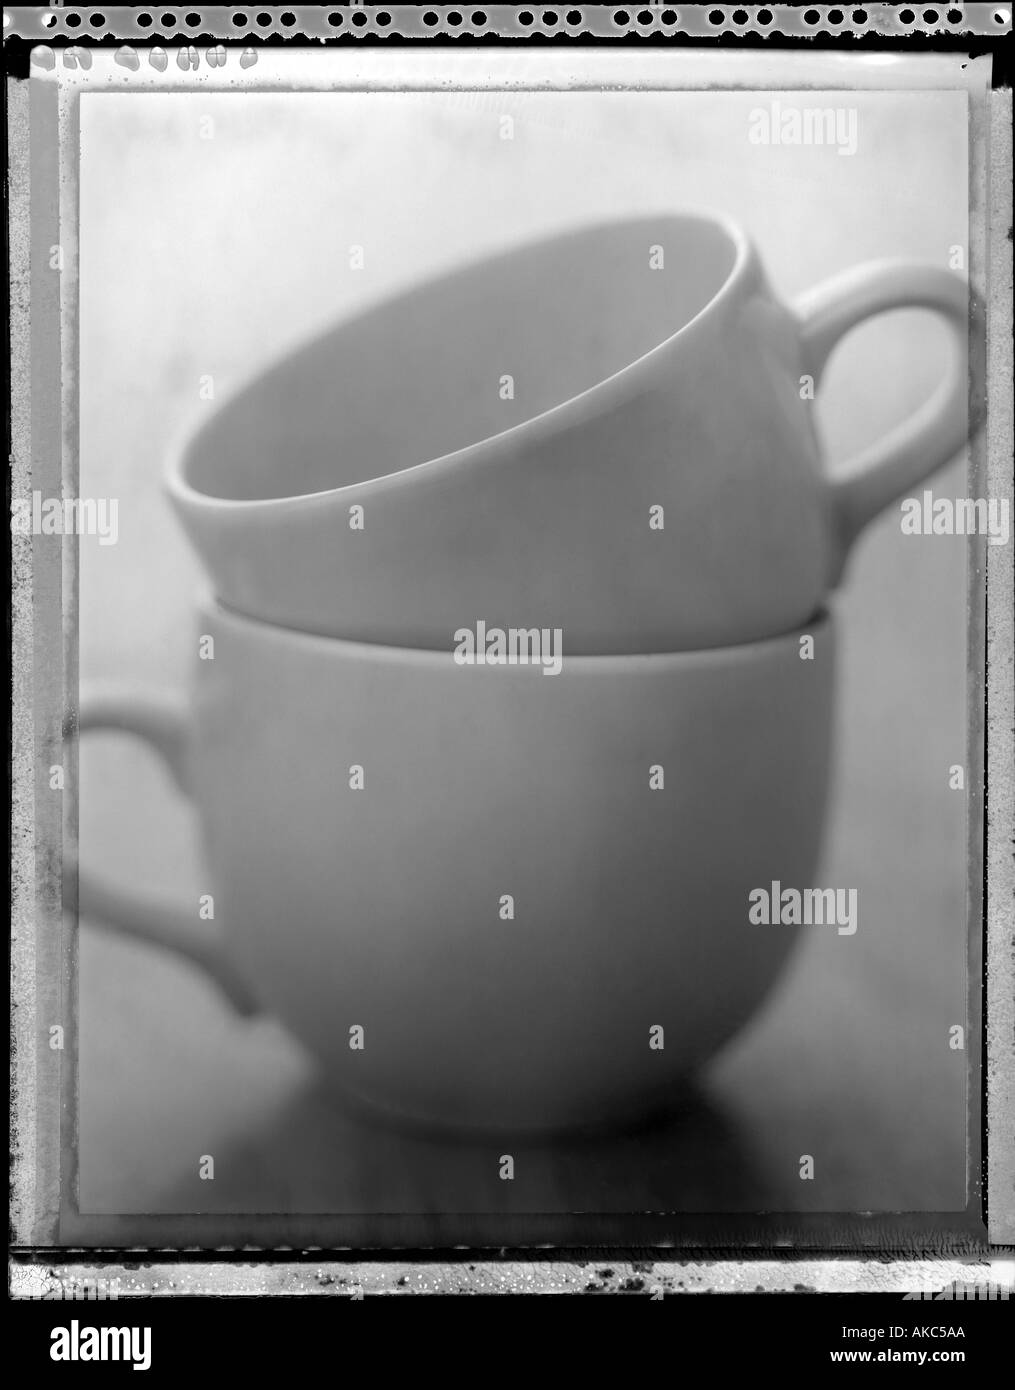 coffee mugs Stock Photo